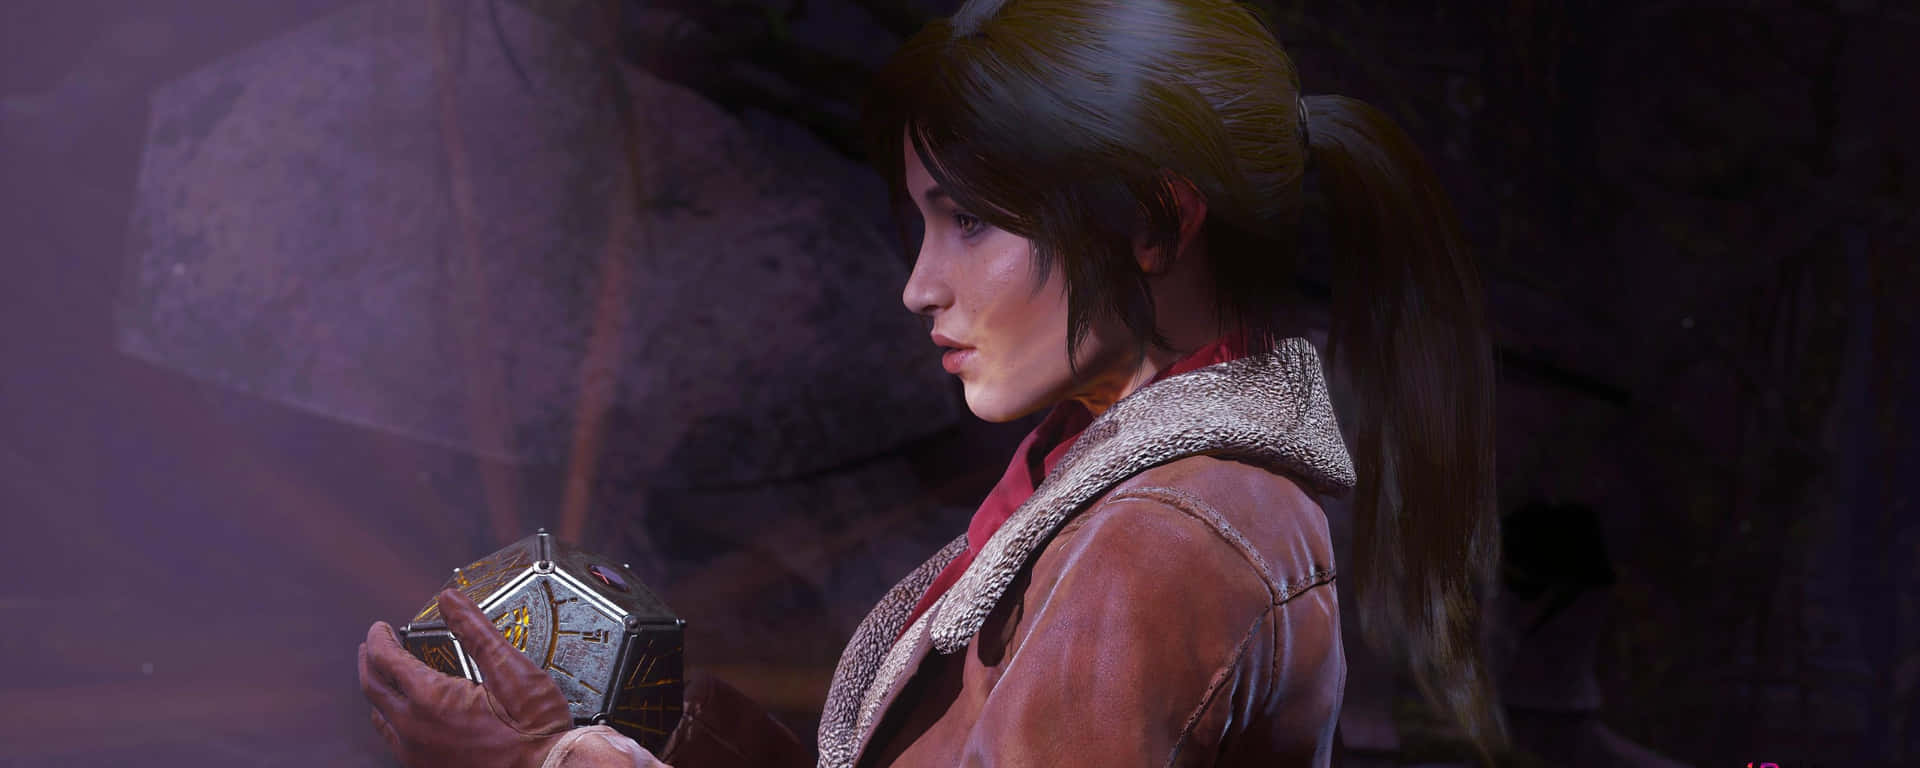 Larahållande Relik 3440x1440p Rise Of The Tomb Raider Bakgrund.